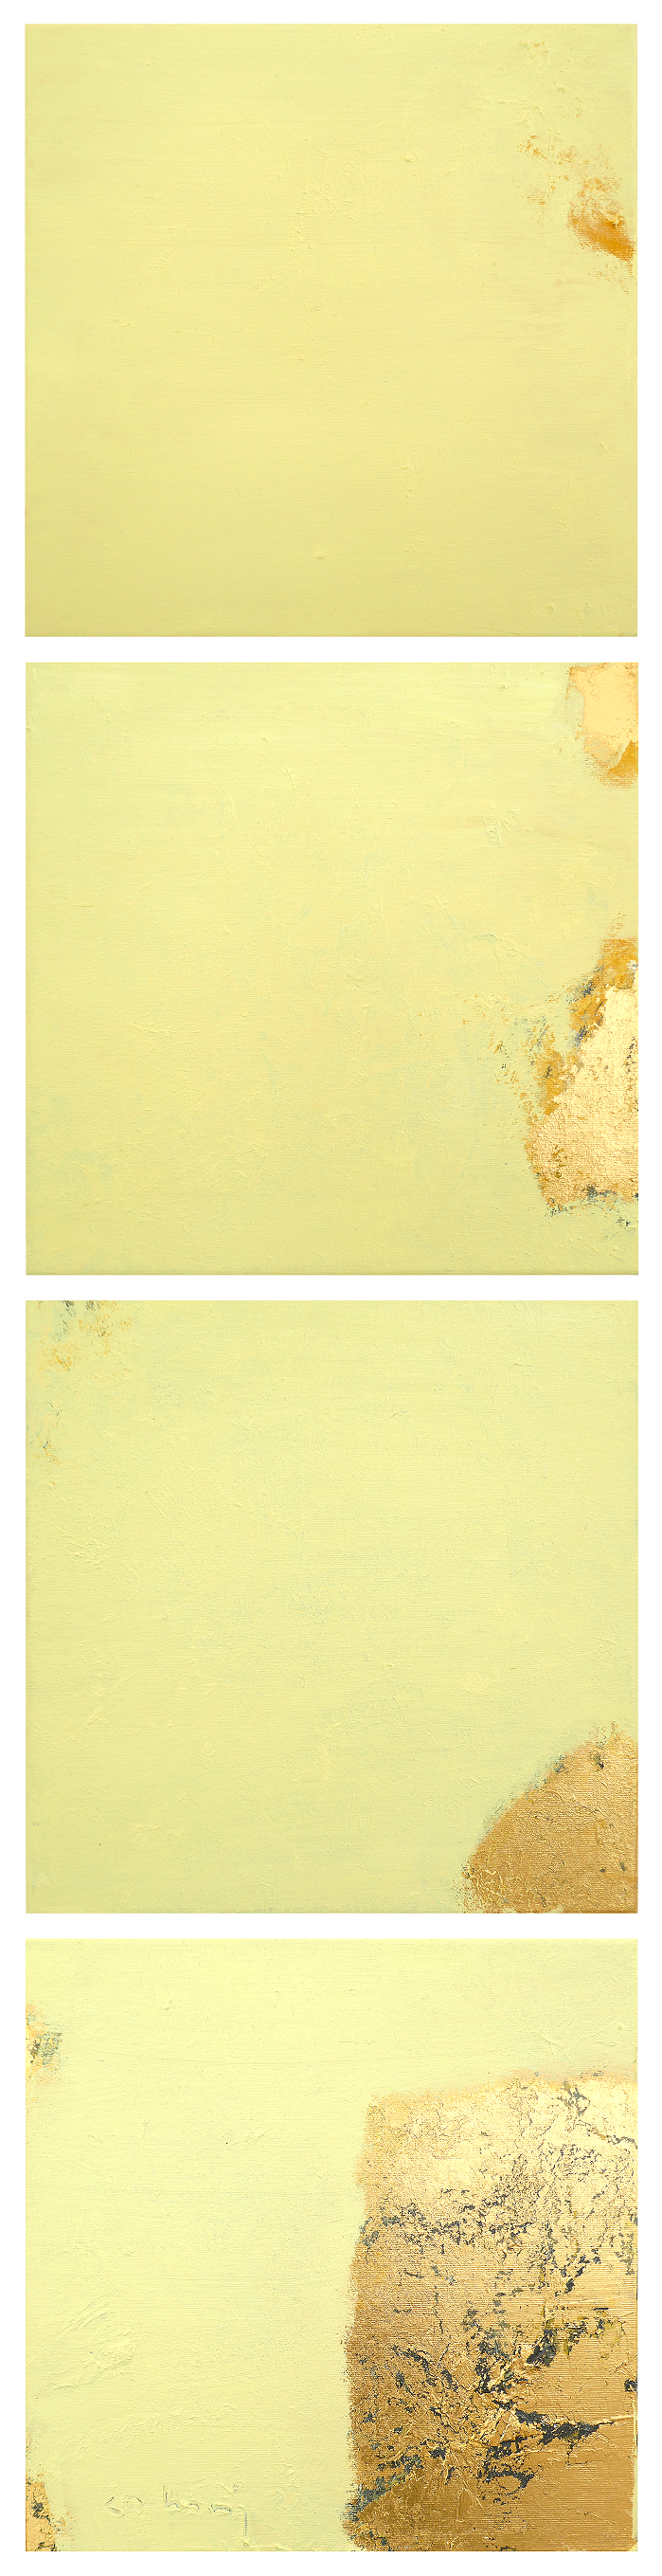 Öl, 24K AU auf Leinwand • oil, 24K Gold on canvas
4x 30 x 30 cm